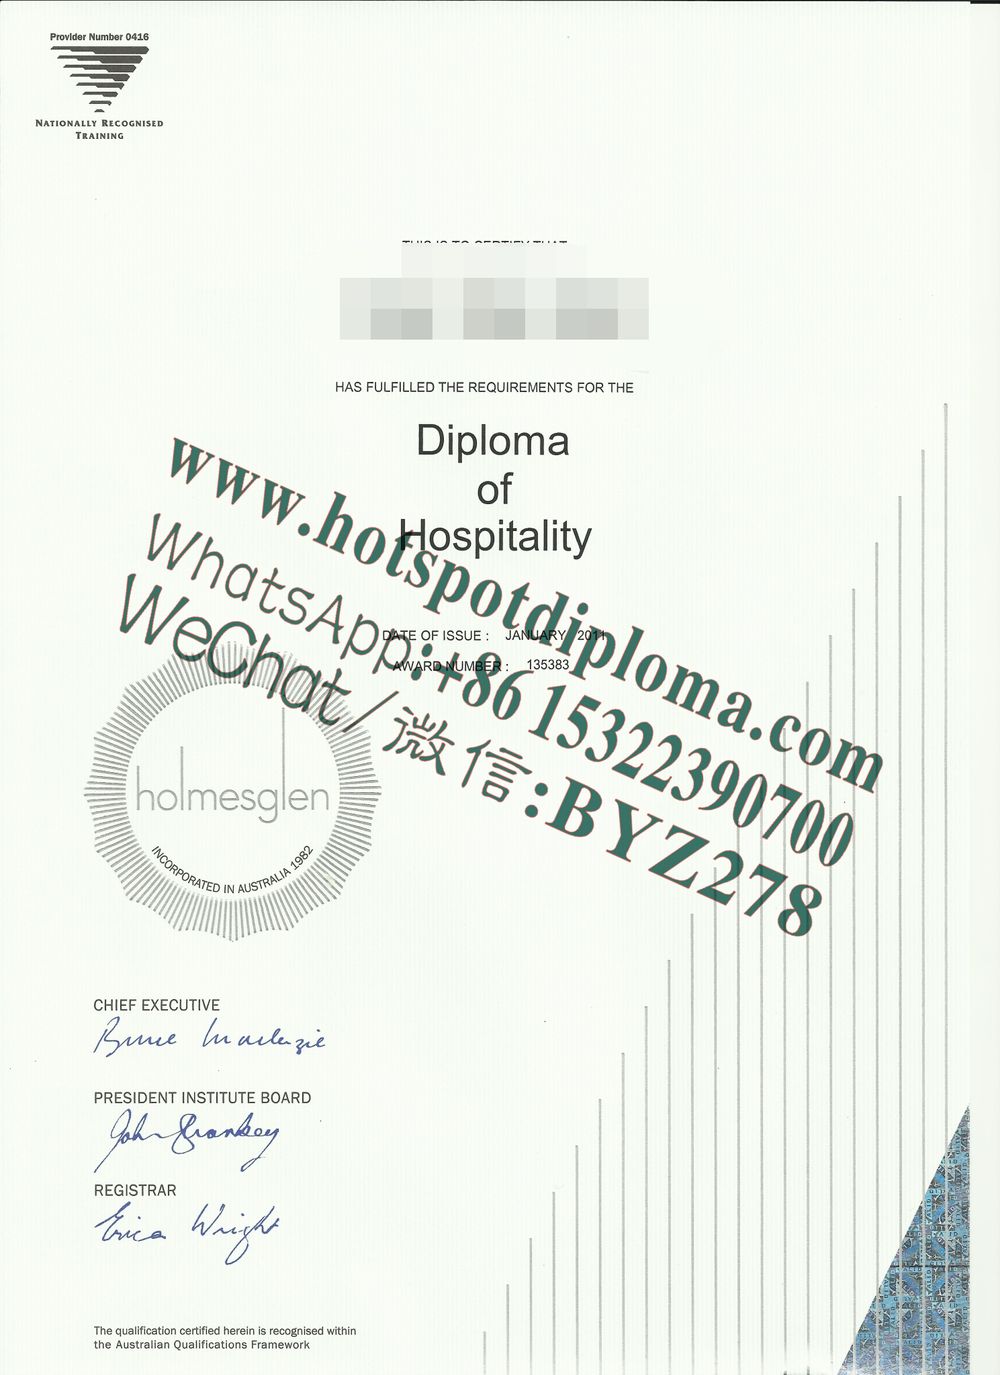 Fake Diploma from Holmesglen University of Technology